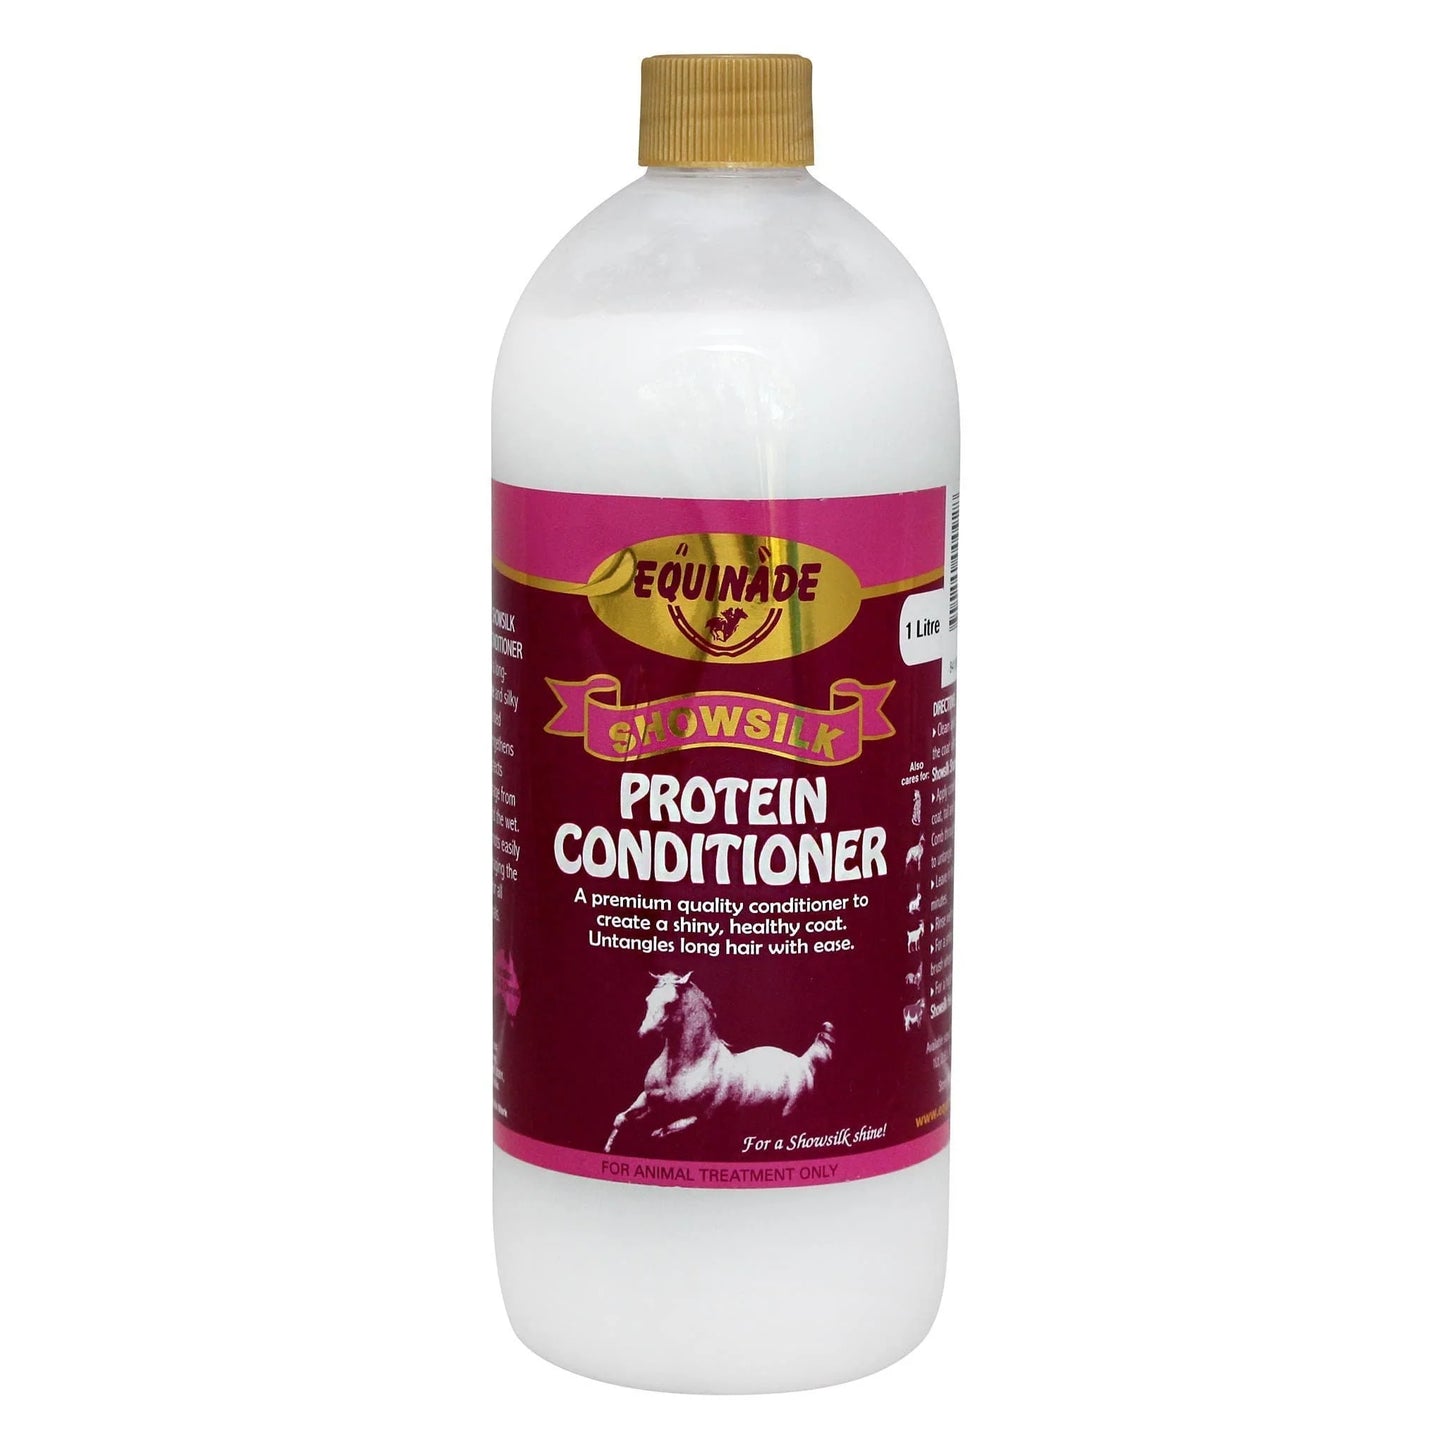 EQUINADE Showsilk protein conditioner